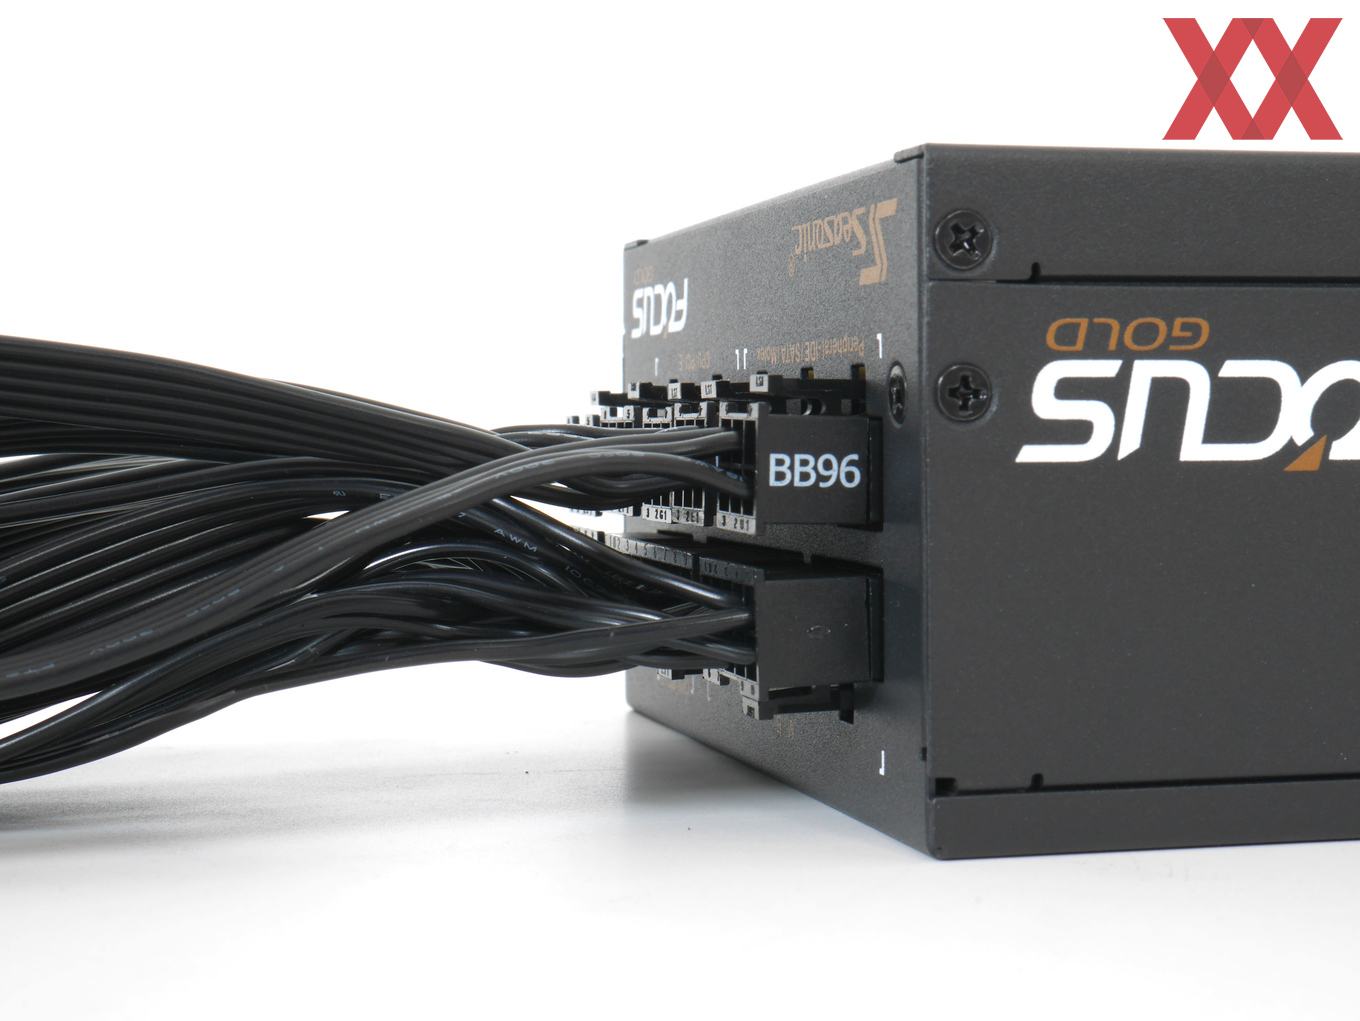 End блок. Seasonic Focus SFX 650. Компактный блок питания Проксима. Be quiet SFX L. Seasonic SSR-650sgx.